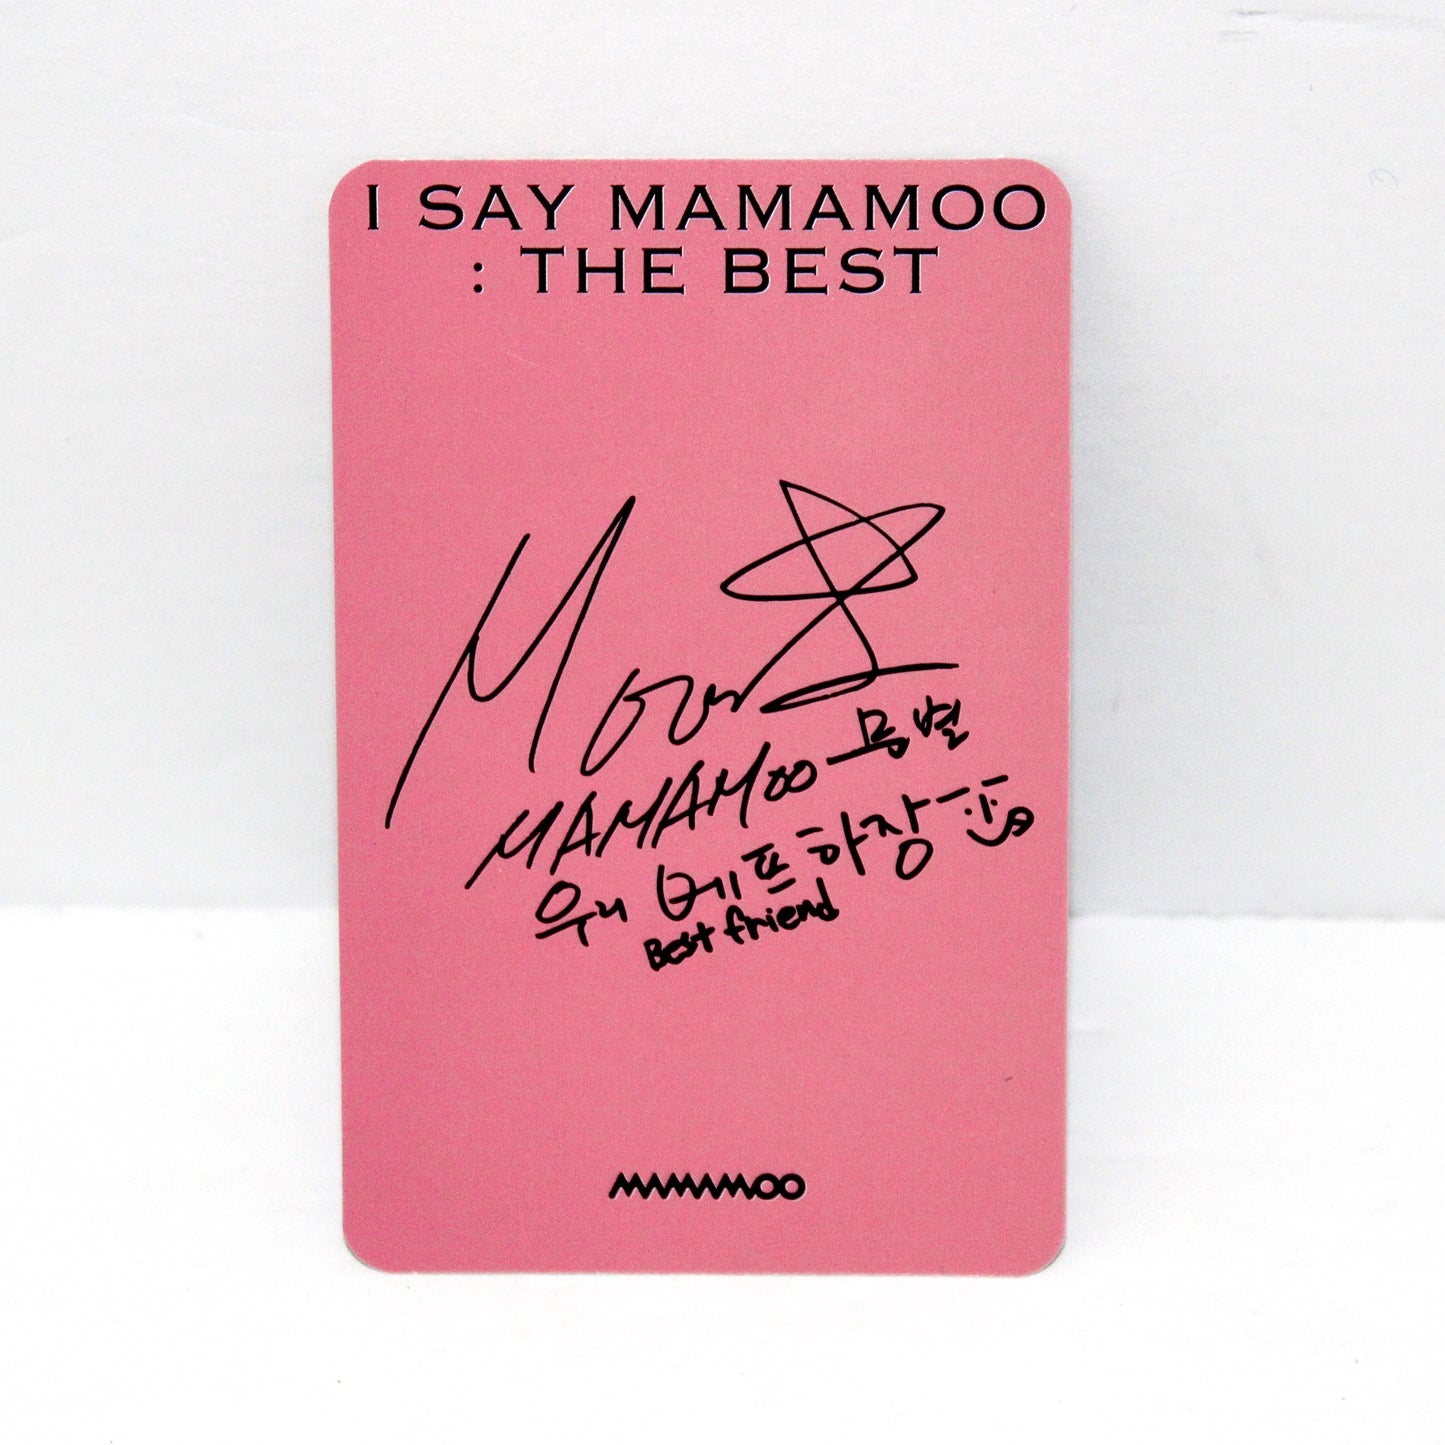 MAMAMOO Compilation Album - I Say Mamamoo: The Best | Inclusions